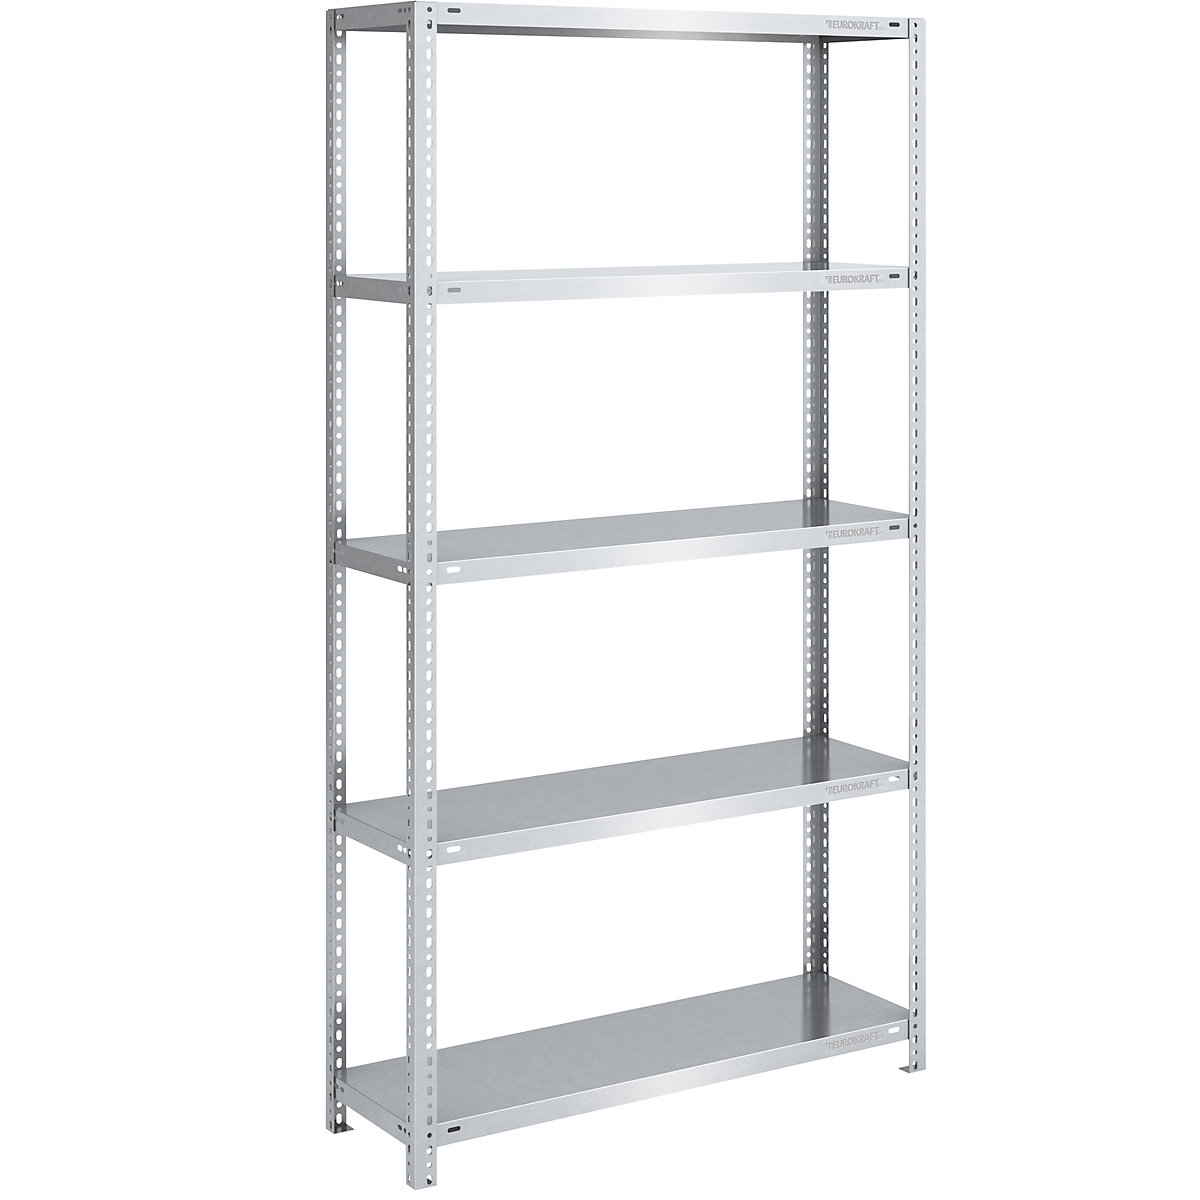 Bolt-together shelf unit, light duty, zinc plated – eurokraft pro, shelf unit height 2000 mm, shelf width 1000 mm, depth 400 mm, standard shelf unit-5